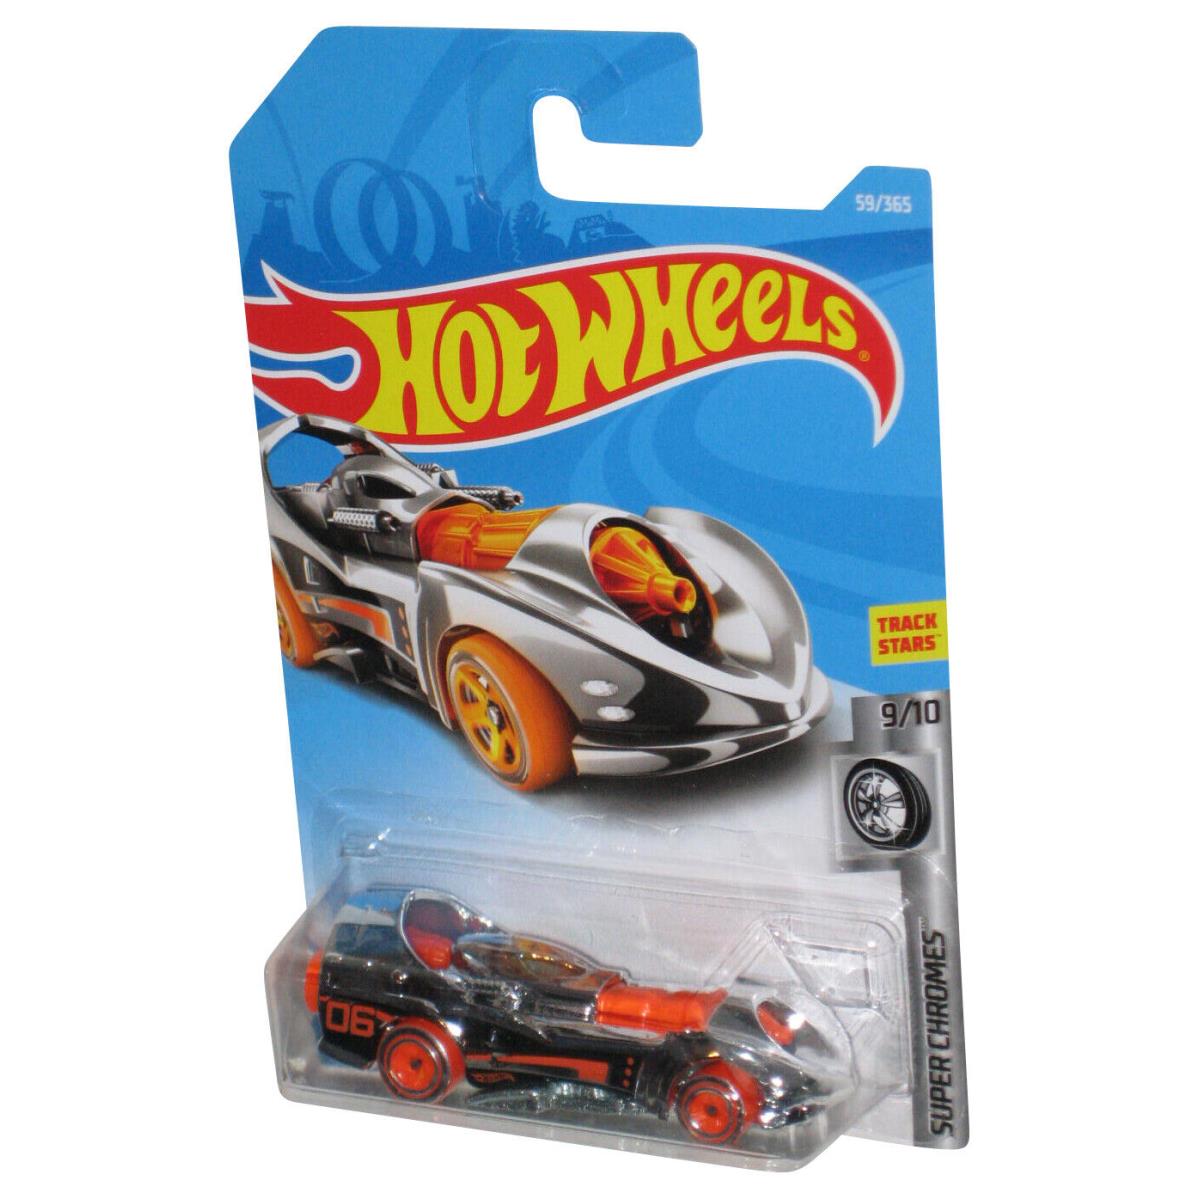 Hot Wheels Super Chromes 9/10 2017 Silver Power Rocket Toy Car 59/365